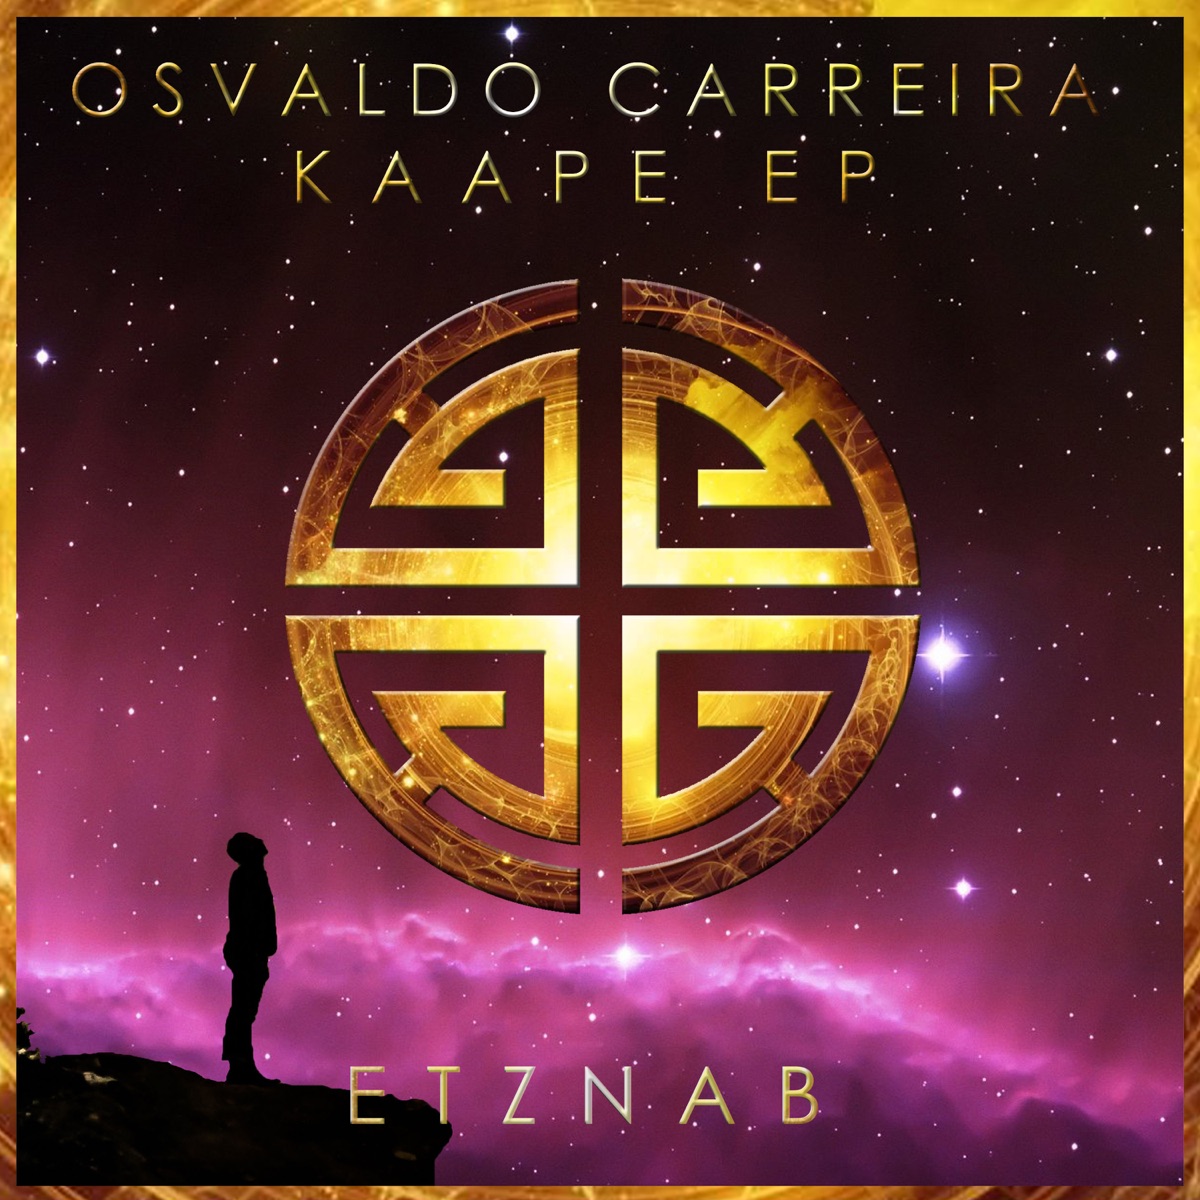 Isabela - Single - Album by Osvaldo Carreira - Apple Music